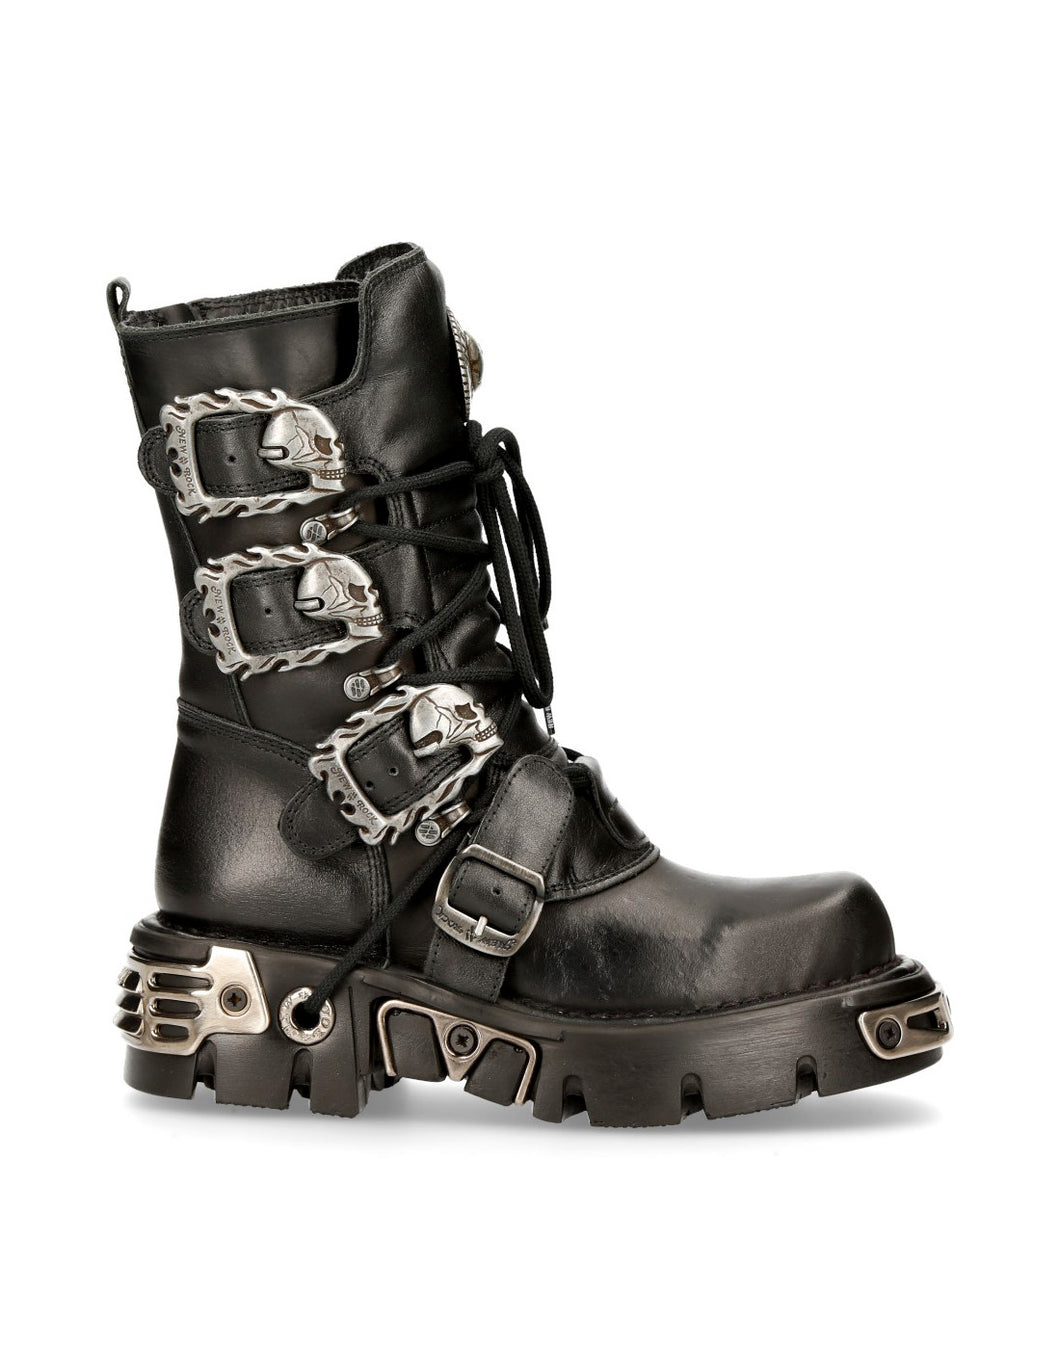 New Rock Schuhe Shoes Boots Stiefel M.391-S1 Bikerstiefel Gothic Echtleder Totenkopf Skull